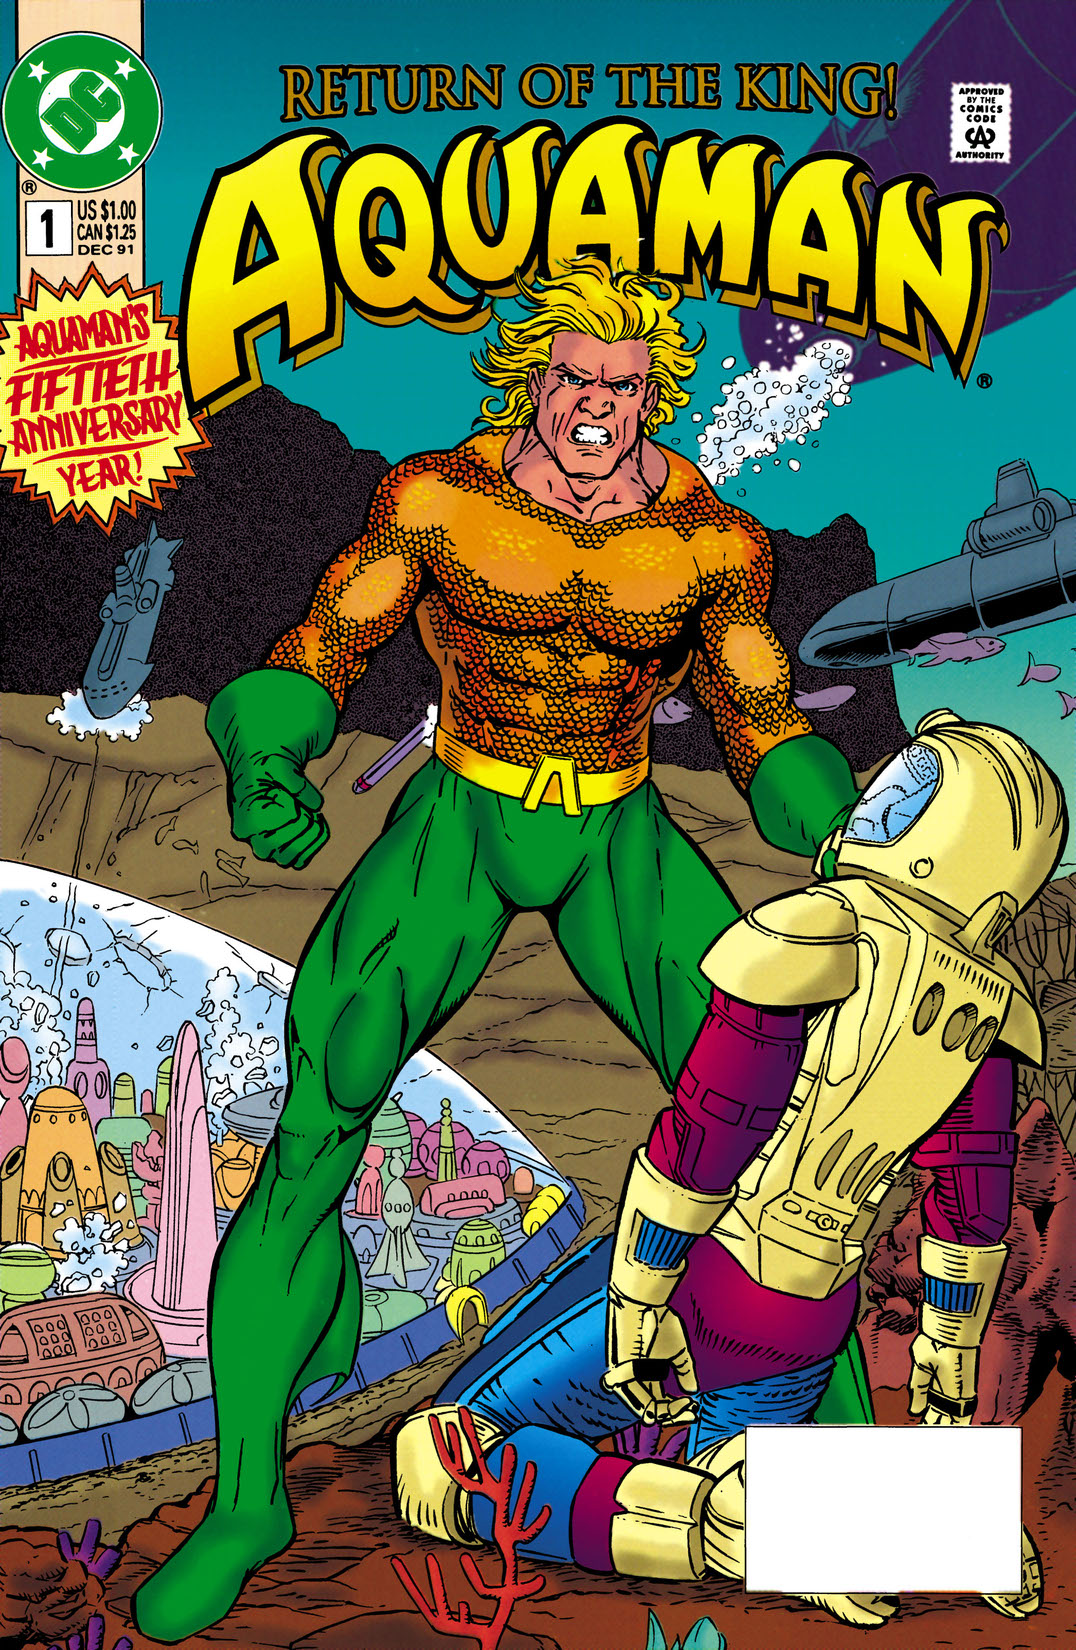 Aquaman ('91 series) (1991-) #1 preview images